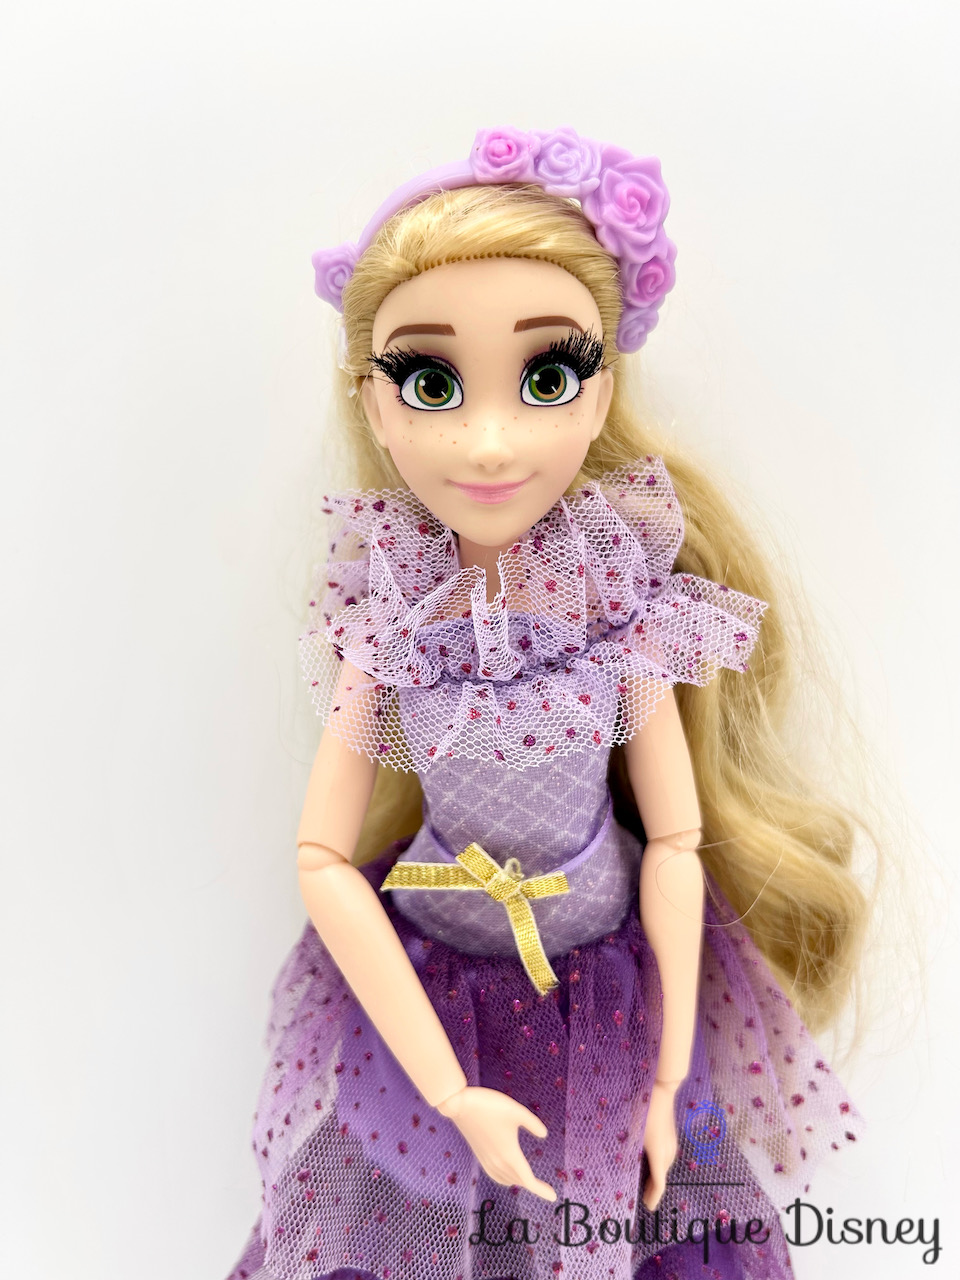 Disney Princesses poupée raiponce pose et style W5581 (-19%)